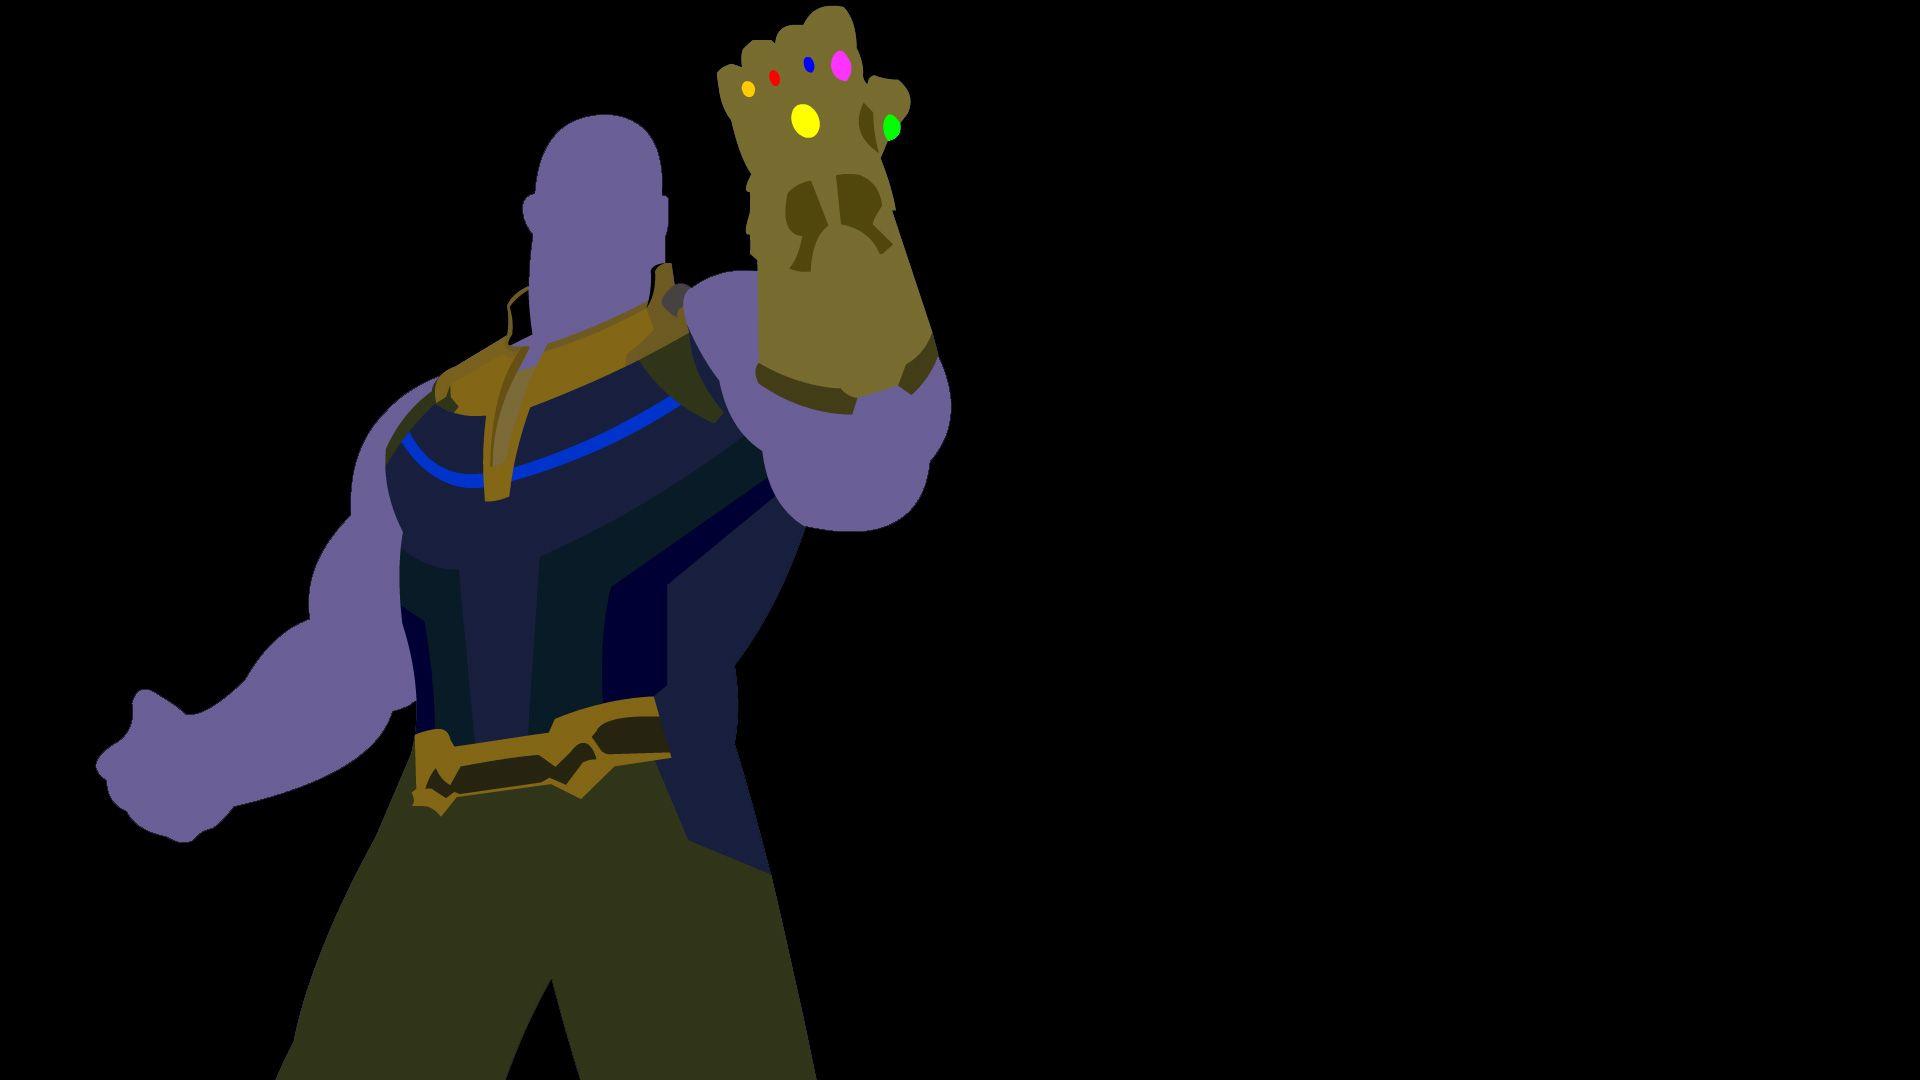 Avengers Infinity War Thanos Gauntlet Minimalism Laptop